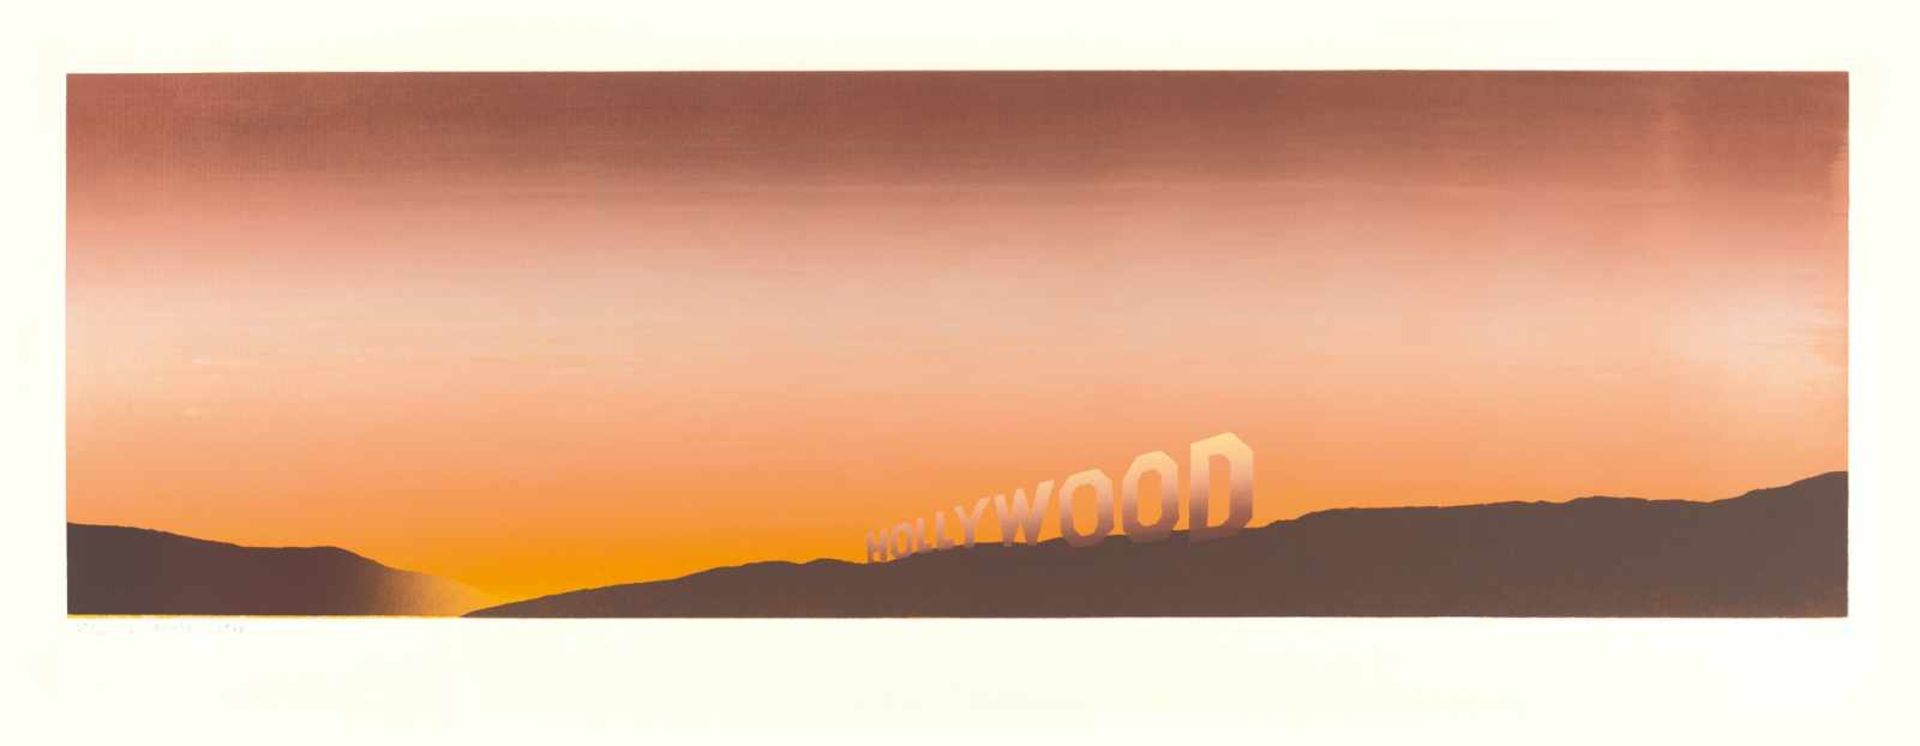 ED RUSCHA - Hollywood Farbige Serigraphie auf Bütten. 1968. Ca. 31,5 x 103 cm (Blattgröße ca. 44,5 x